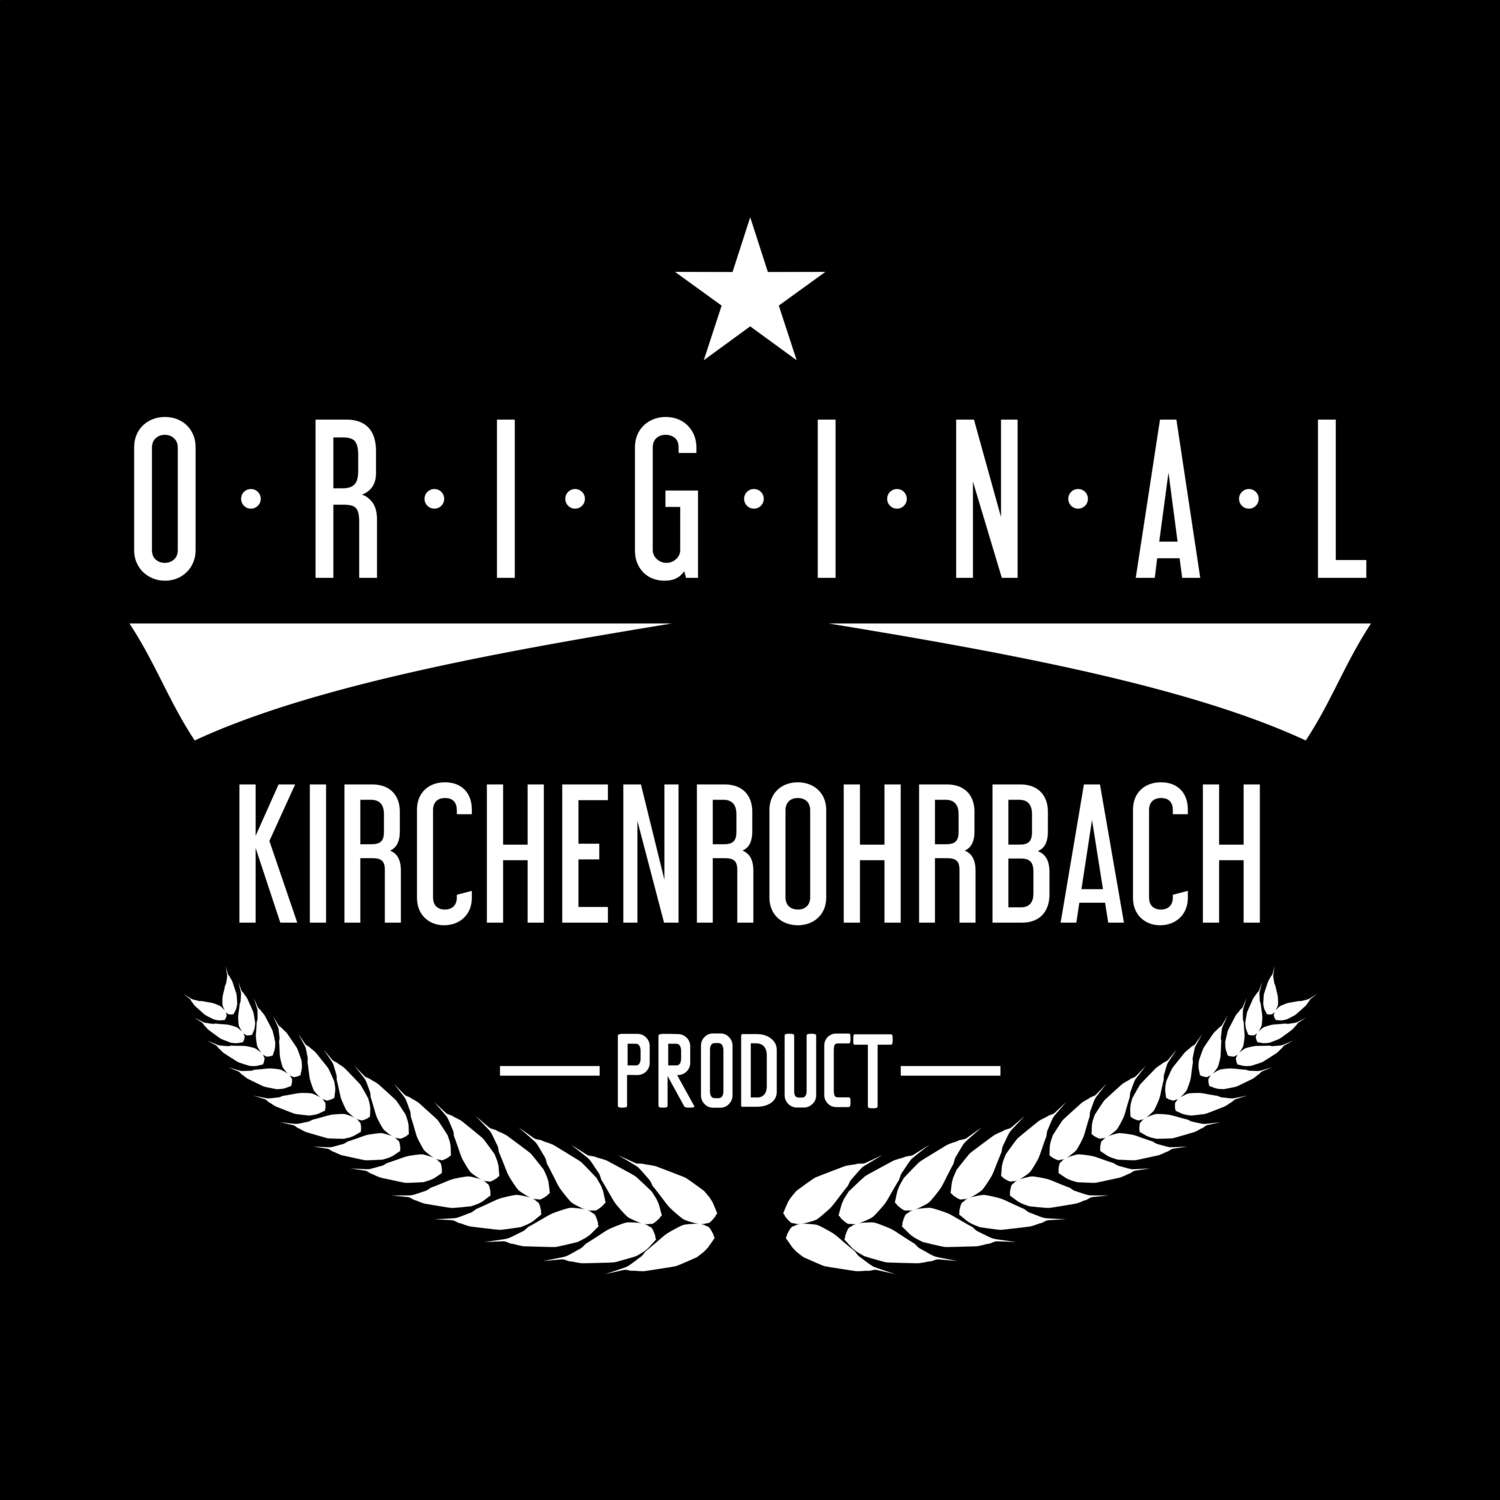 Kirchenrohrbach T-Shirt »Original Product«